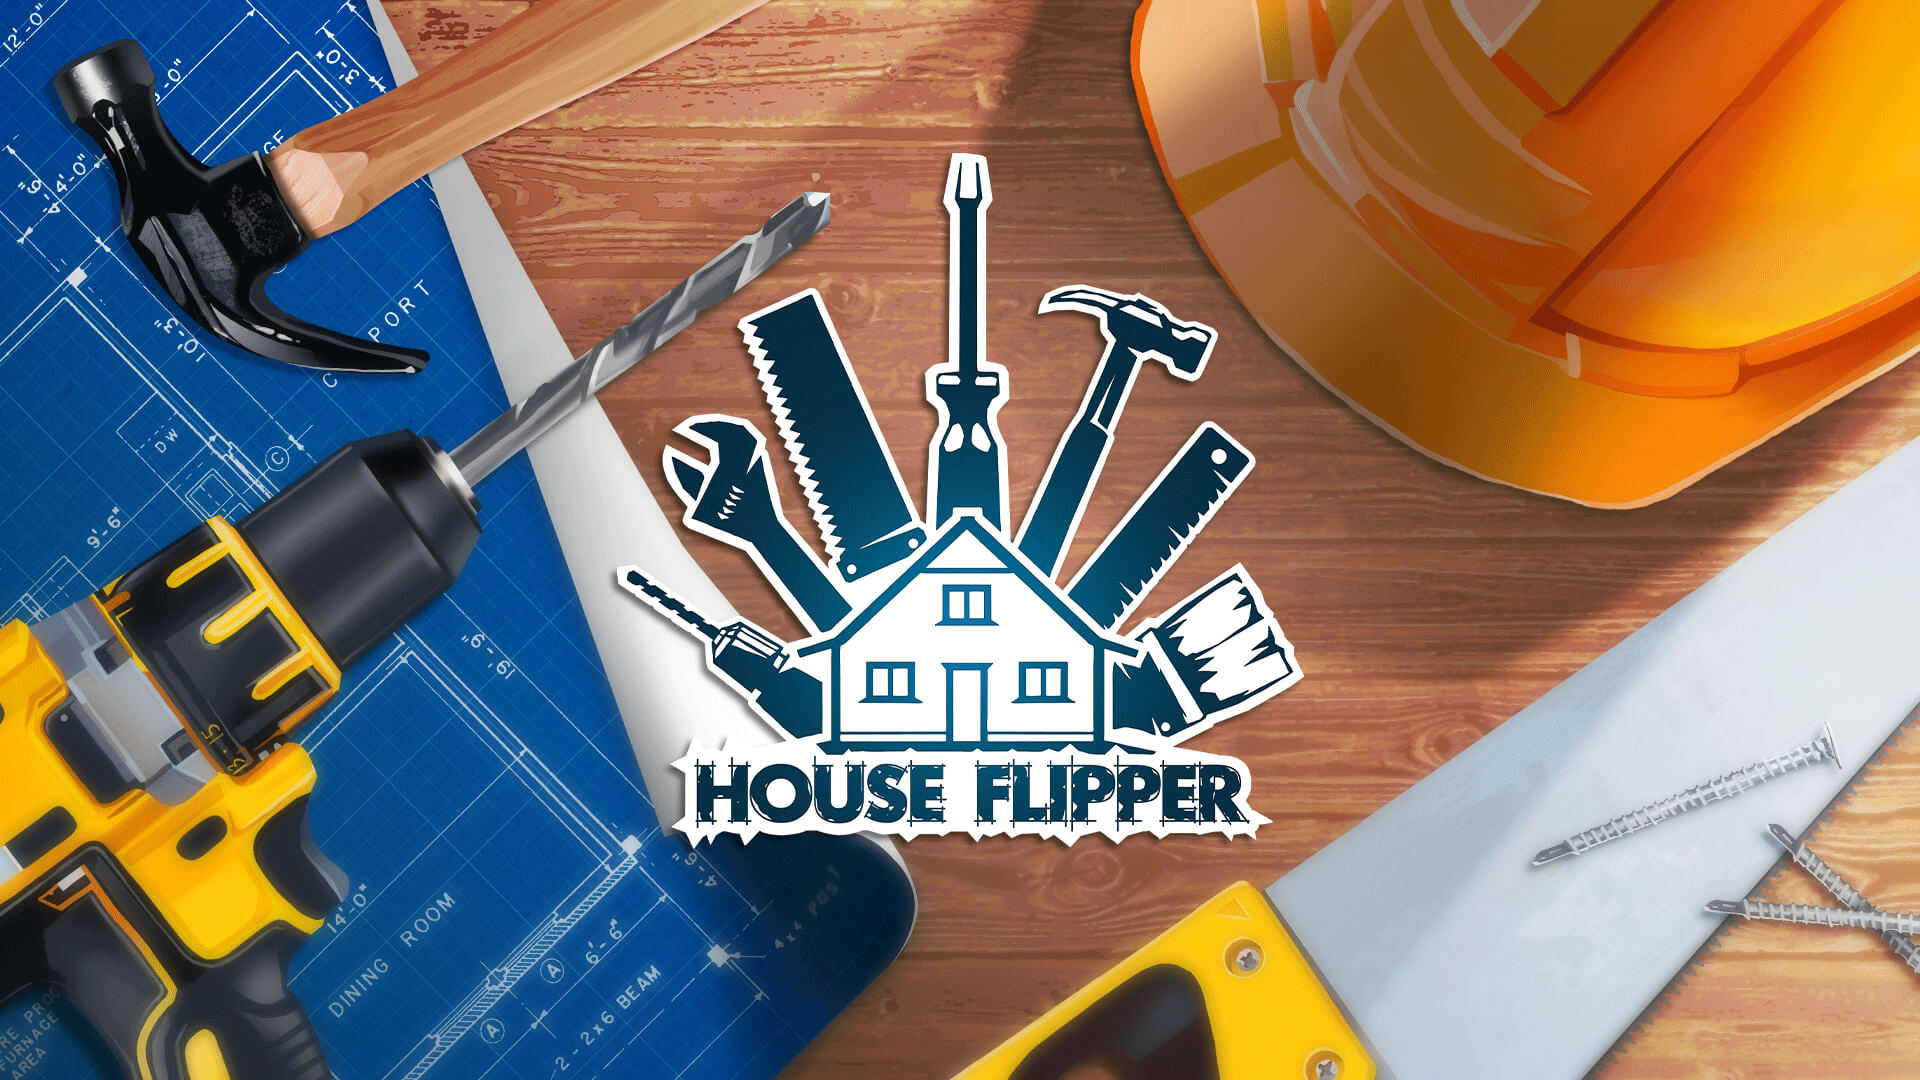 house flipper 2 macbook